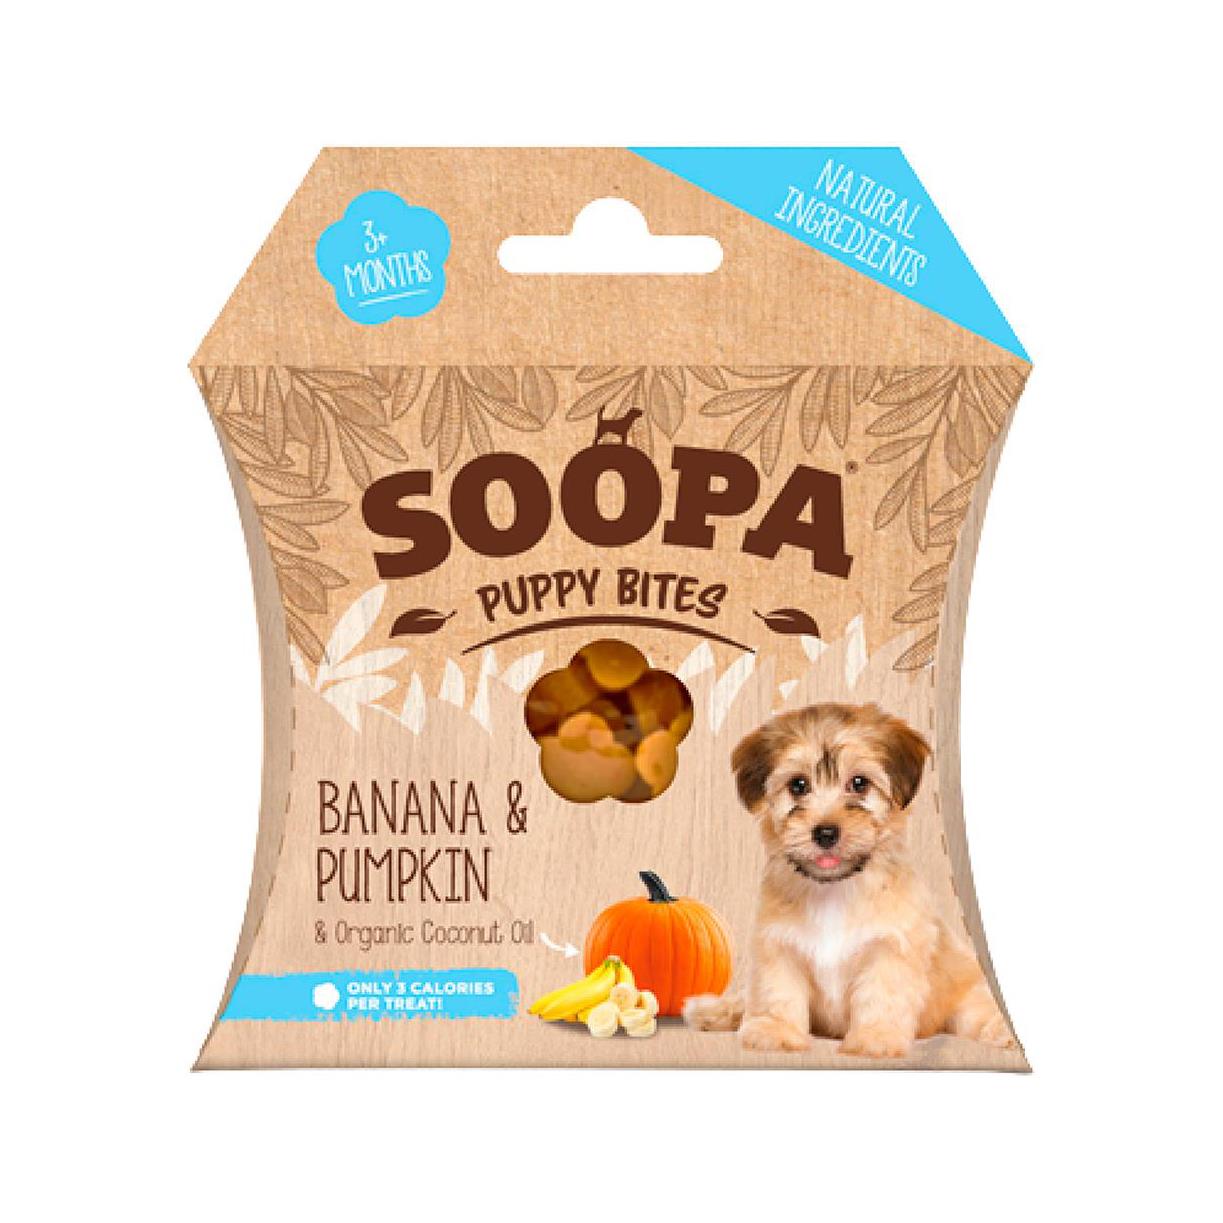 Banana & Pumpkin puppy dog treats